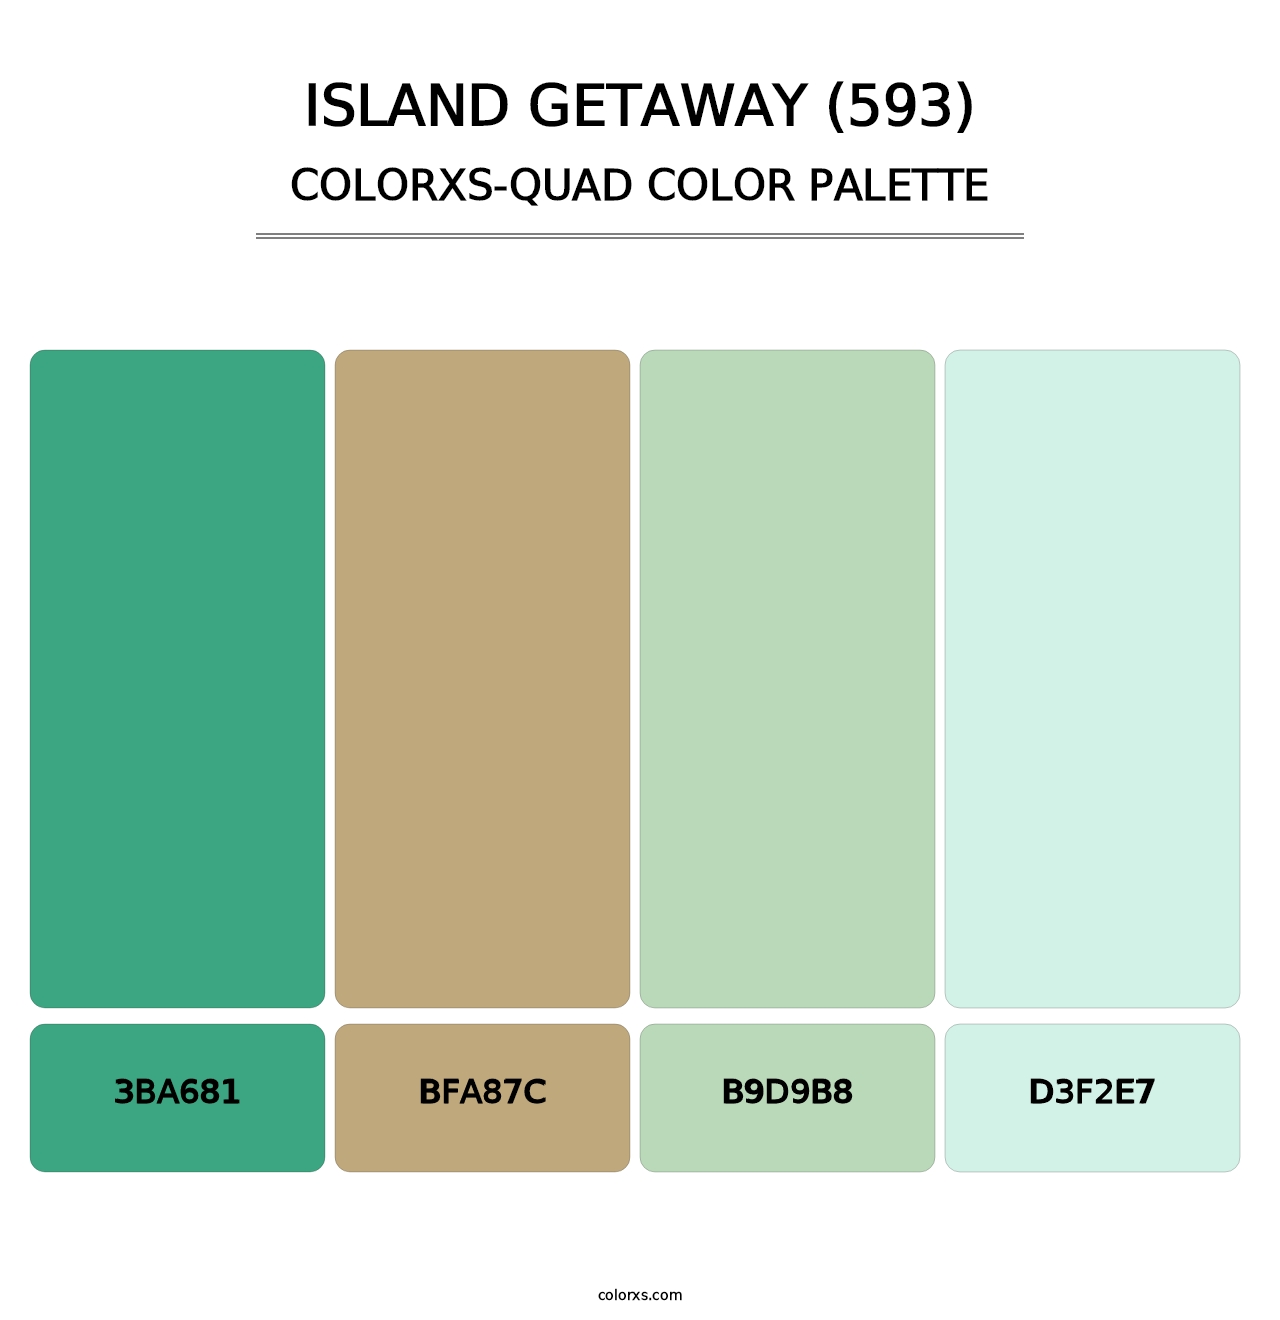 Island Getaway (593) - Colorxs Quad Palette